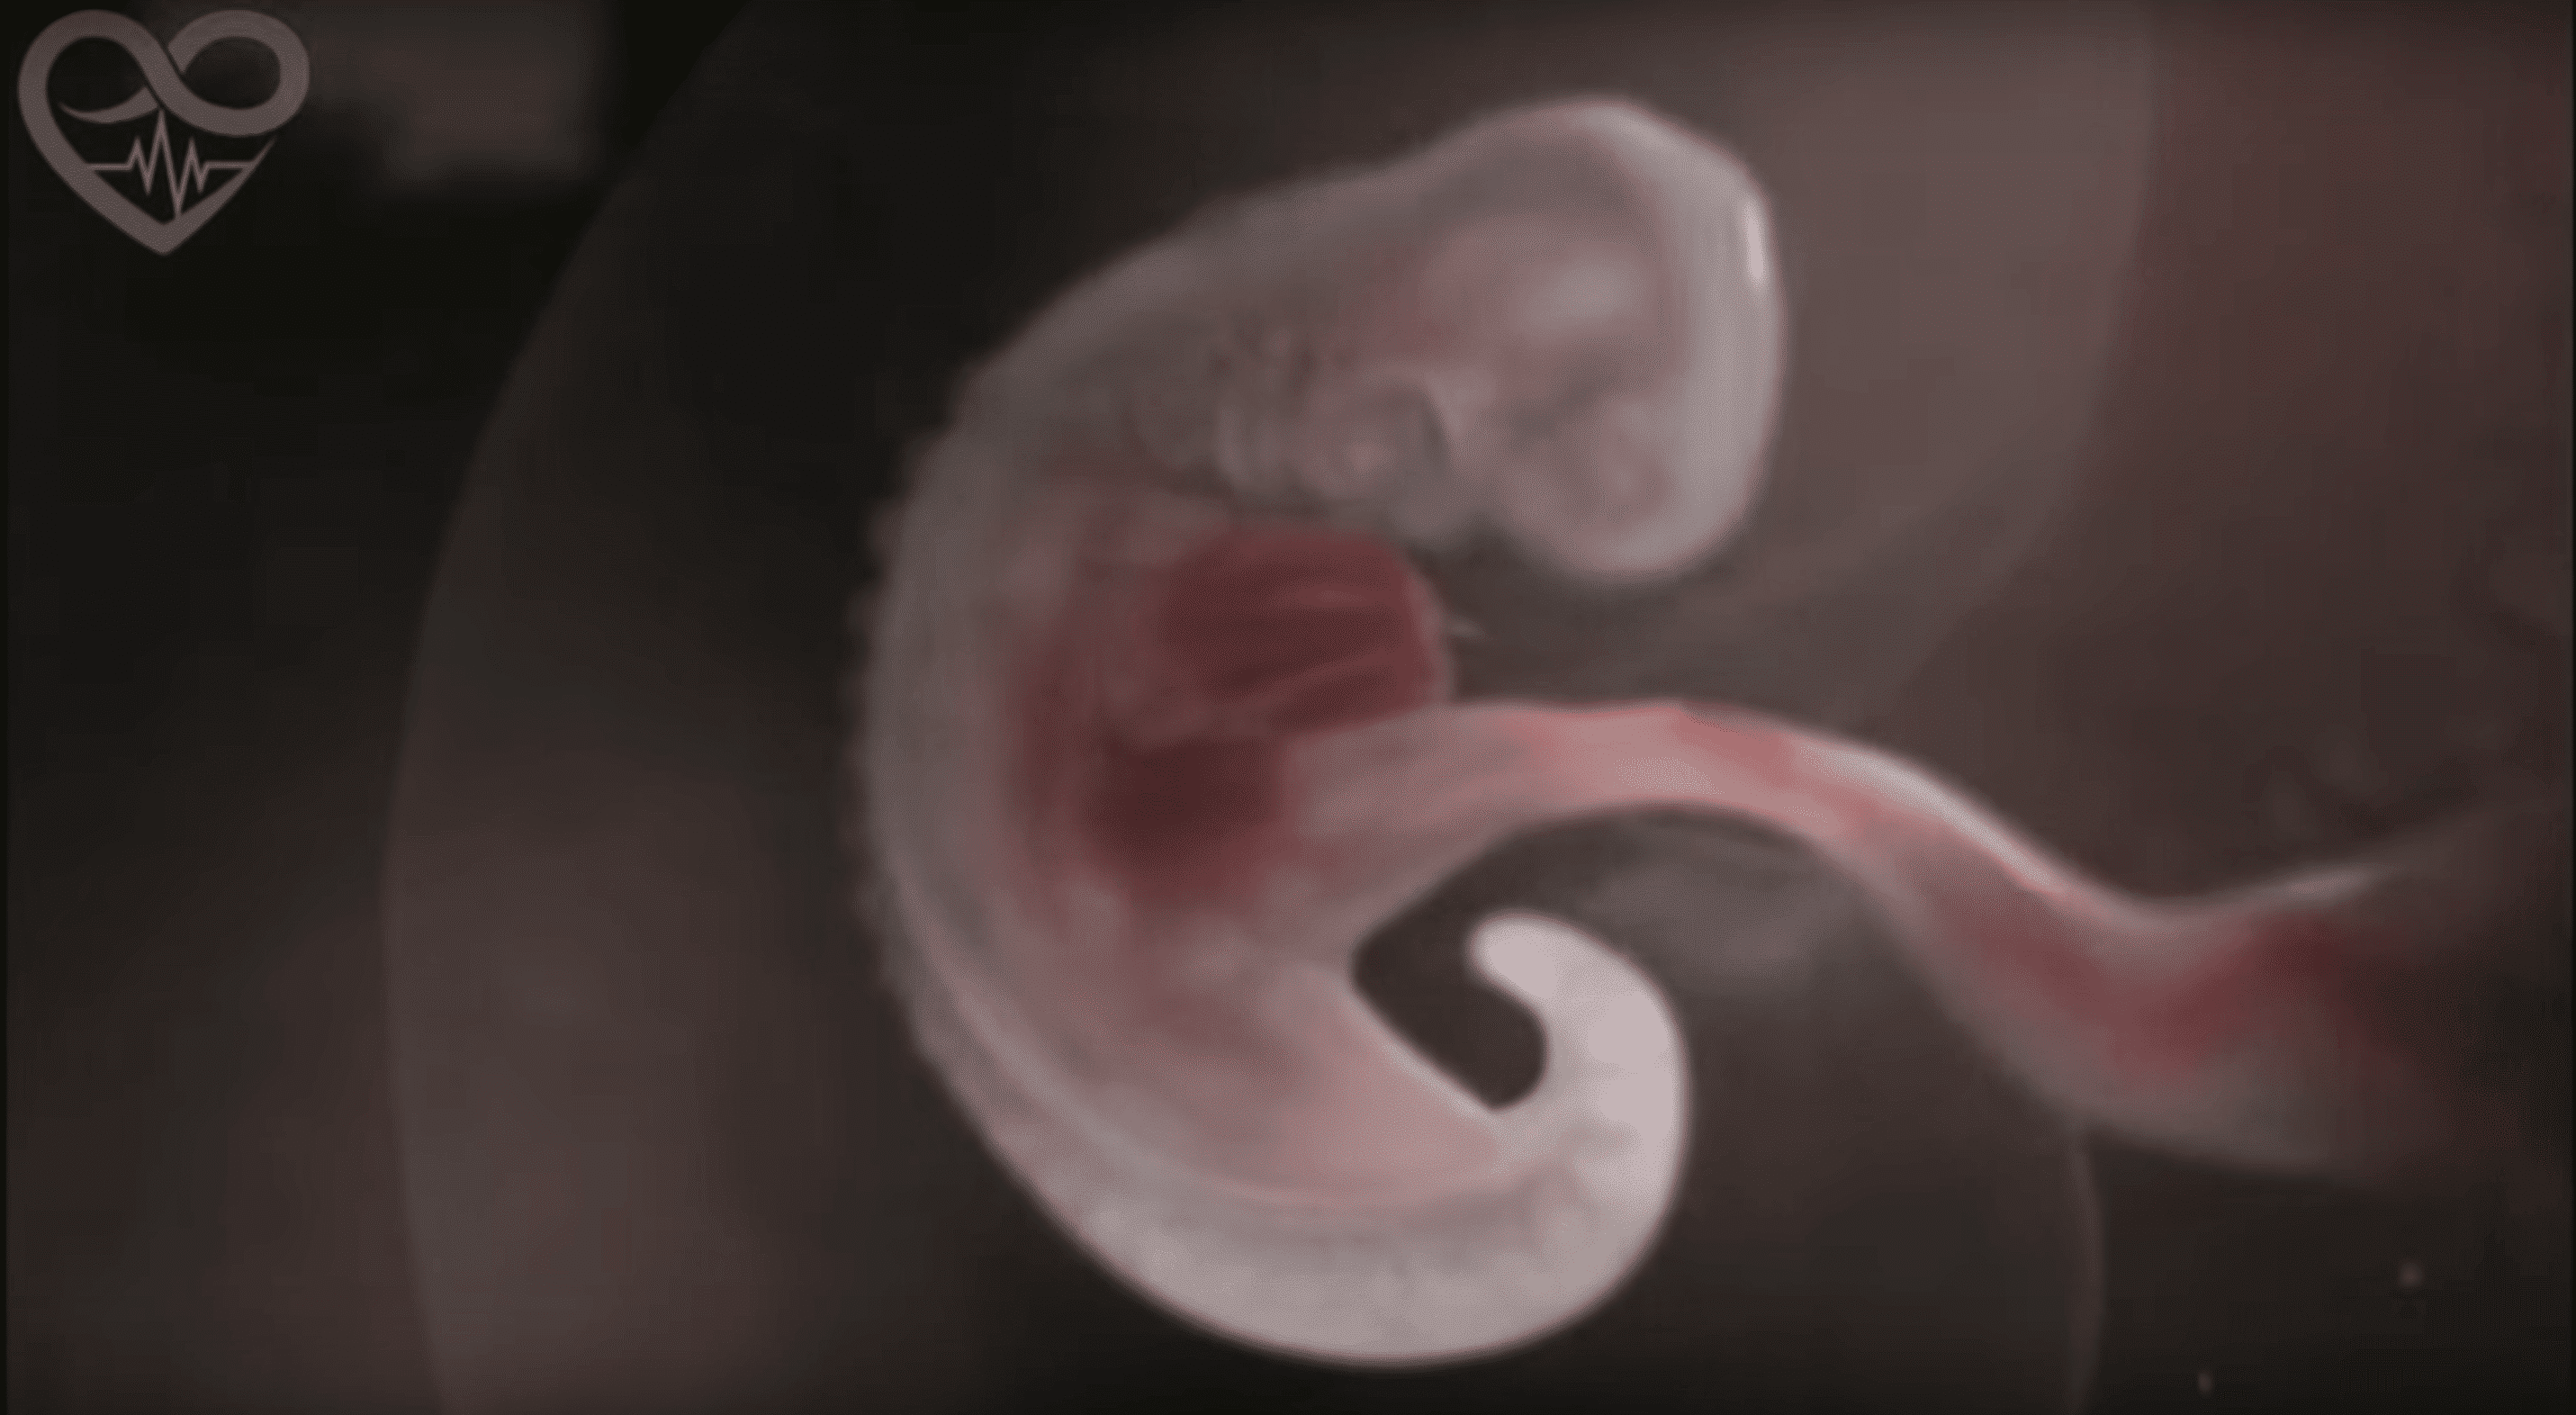 Fetus develops heart and spine. | Source: YouTube/BobbyandDannaJackson